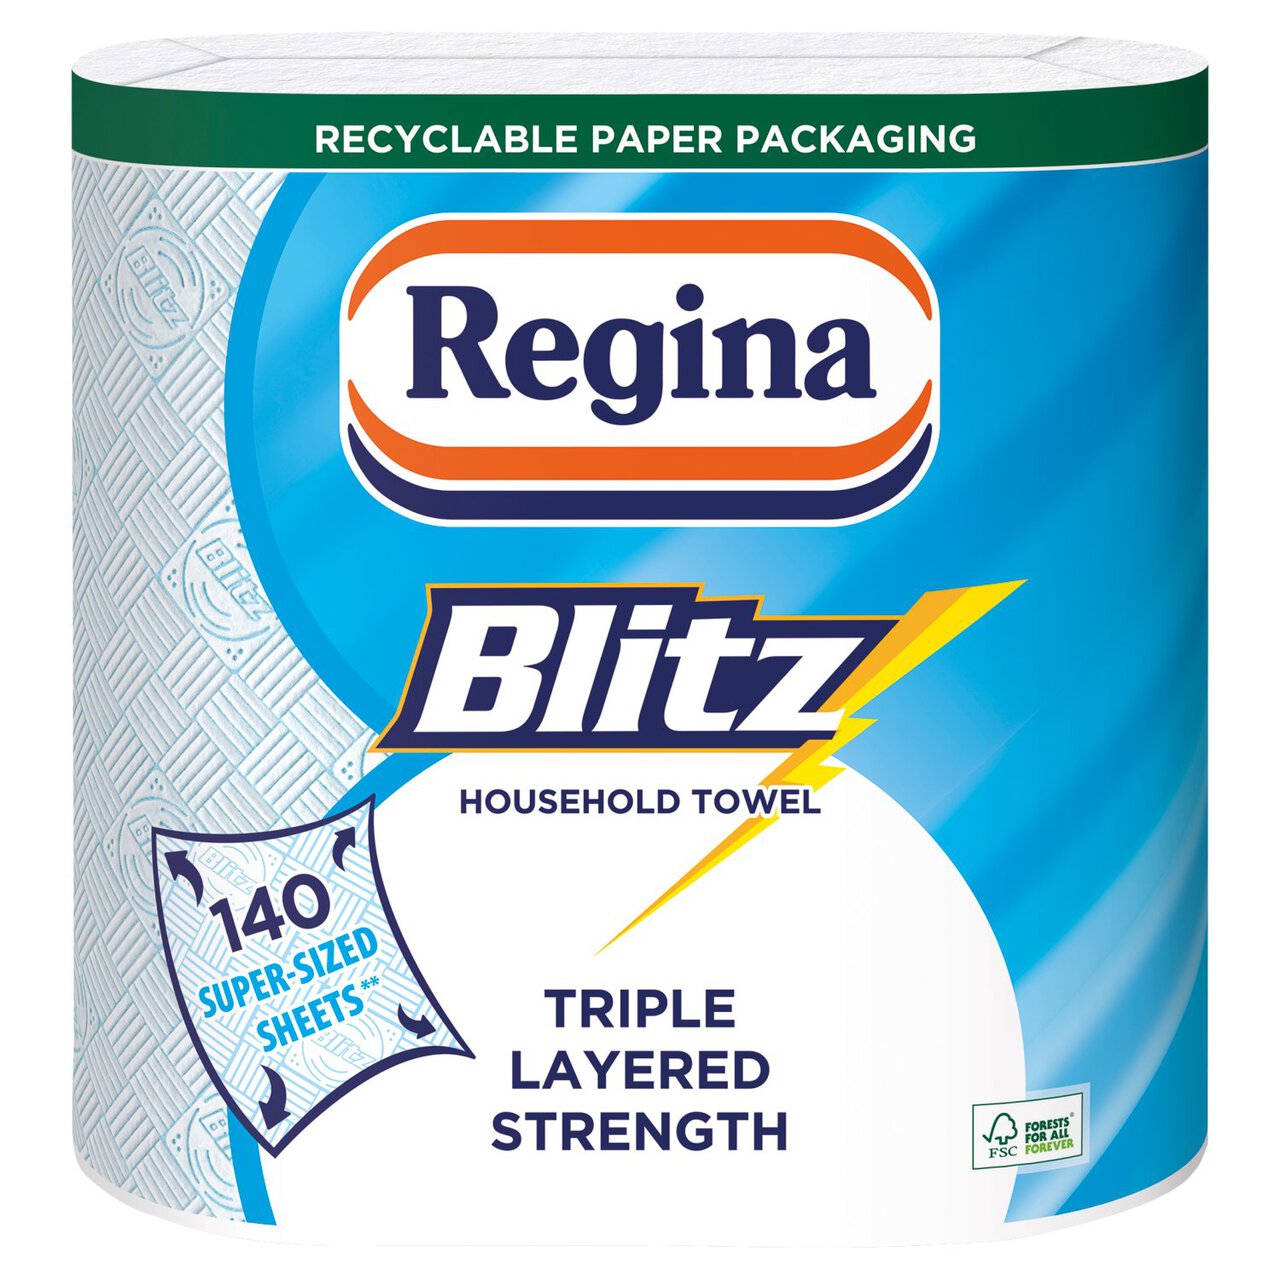 Regina Blitz Household Towel - 2 Rolls 2 per pack